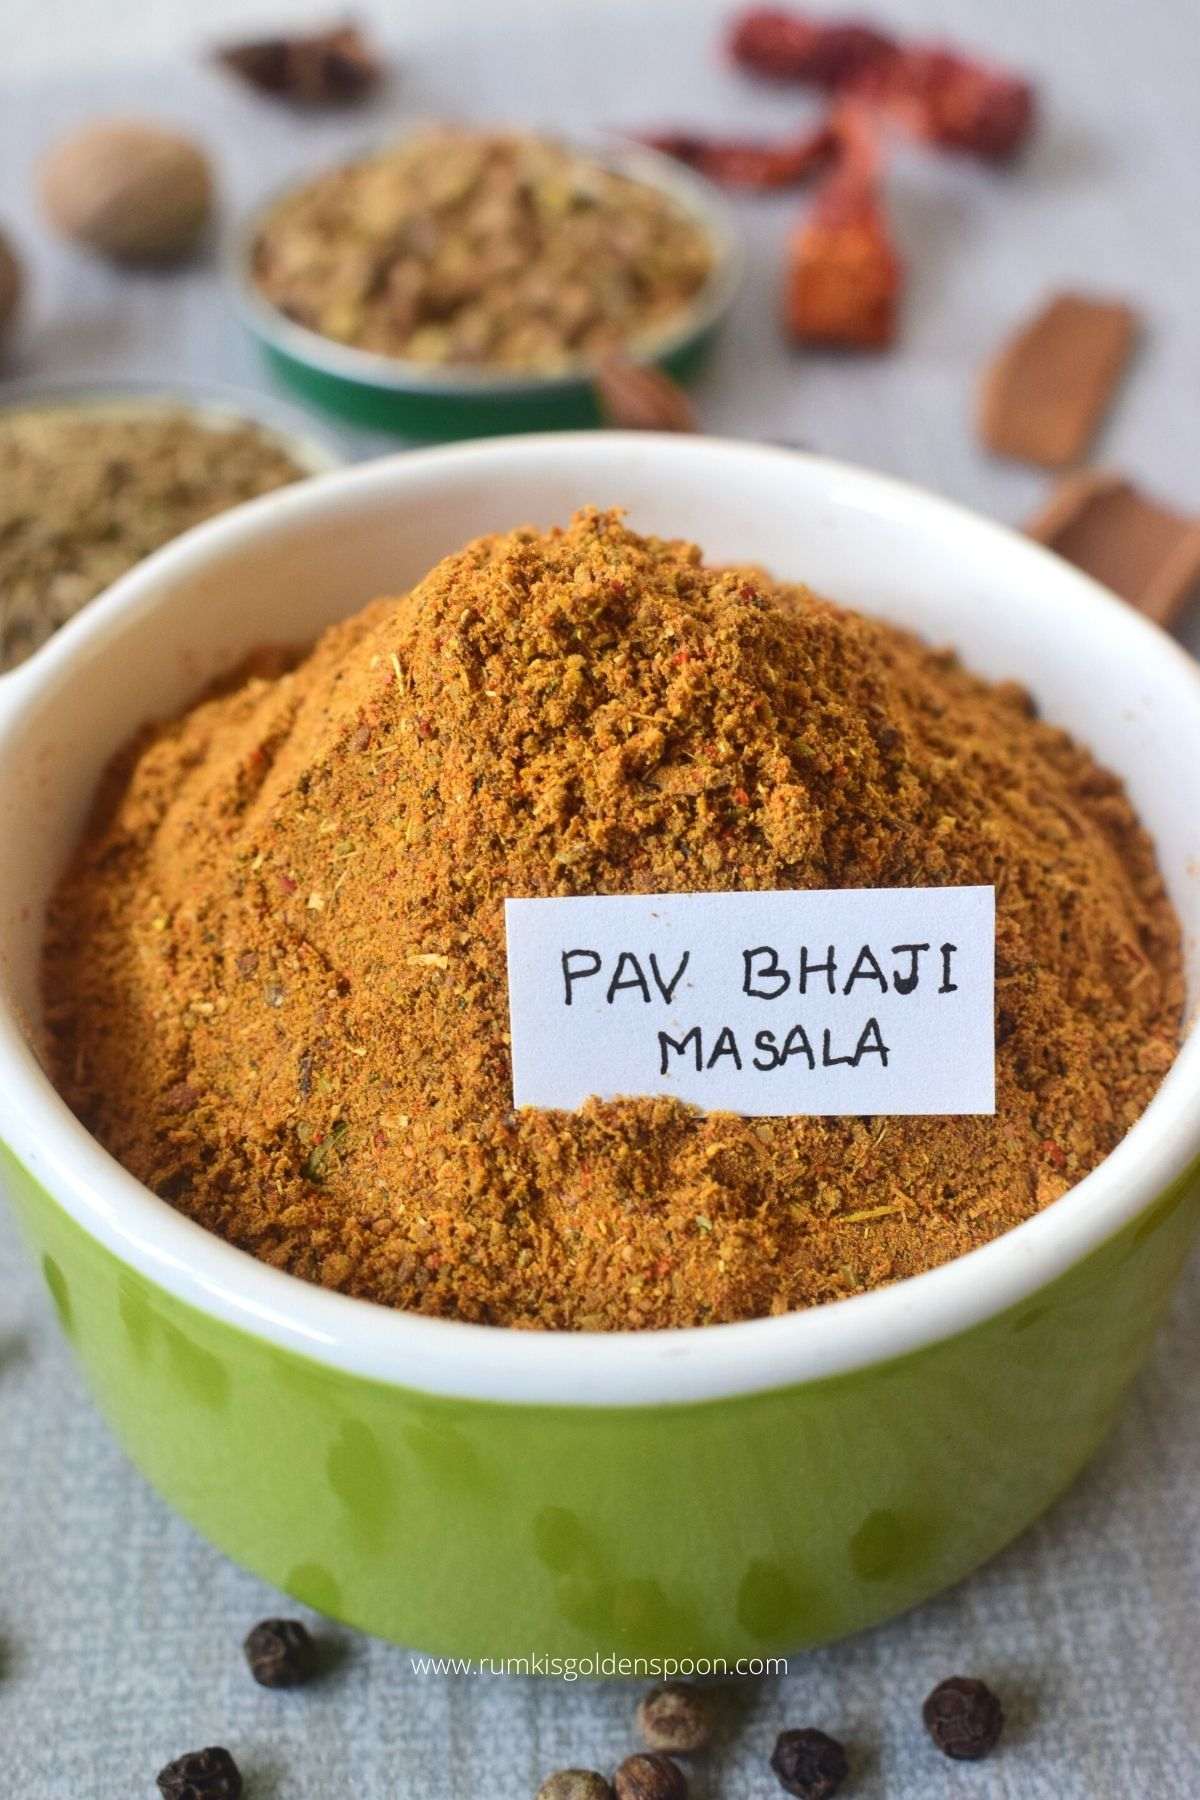 pav bhaji masala recipe, recipe of pav bhaji masala, how to make pav bhaji masala, how to make pav bhaji masala at home, pav bhaji masala powder recipe, pav bhaji masala powder, recipe for pav bhaji masala powder, recipe of pav bhaji masala powder, homemade pav bhaji masala, homemade pav bhaji masala powder recipe, everest pav bhaji masala recipe, best pav bhaji masala powder, how to make pav bhaji masala powder, how to make pav bhaji step by step, pav bhaji masala recipe step by step, pav bhaji masala ki recipe, how to make pav bhaji masala powder at home, pav bhaji masala powder at home, DIY recipe, Rumki's Golden Spoon